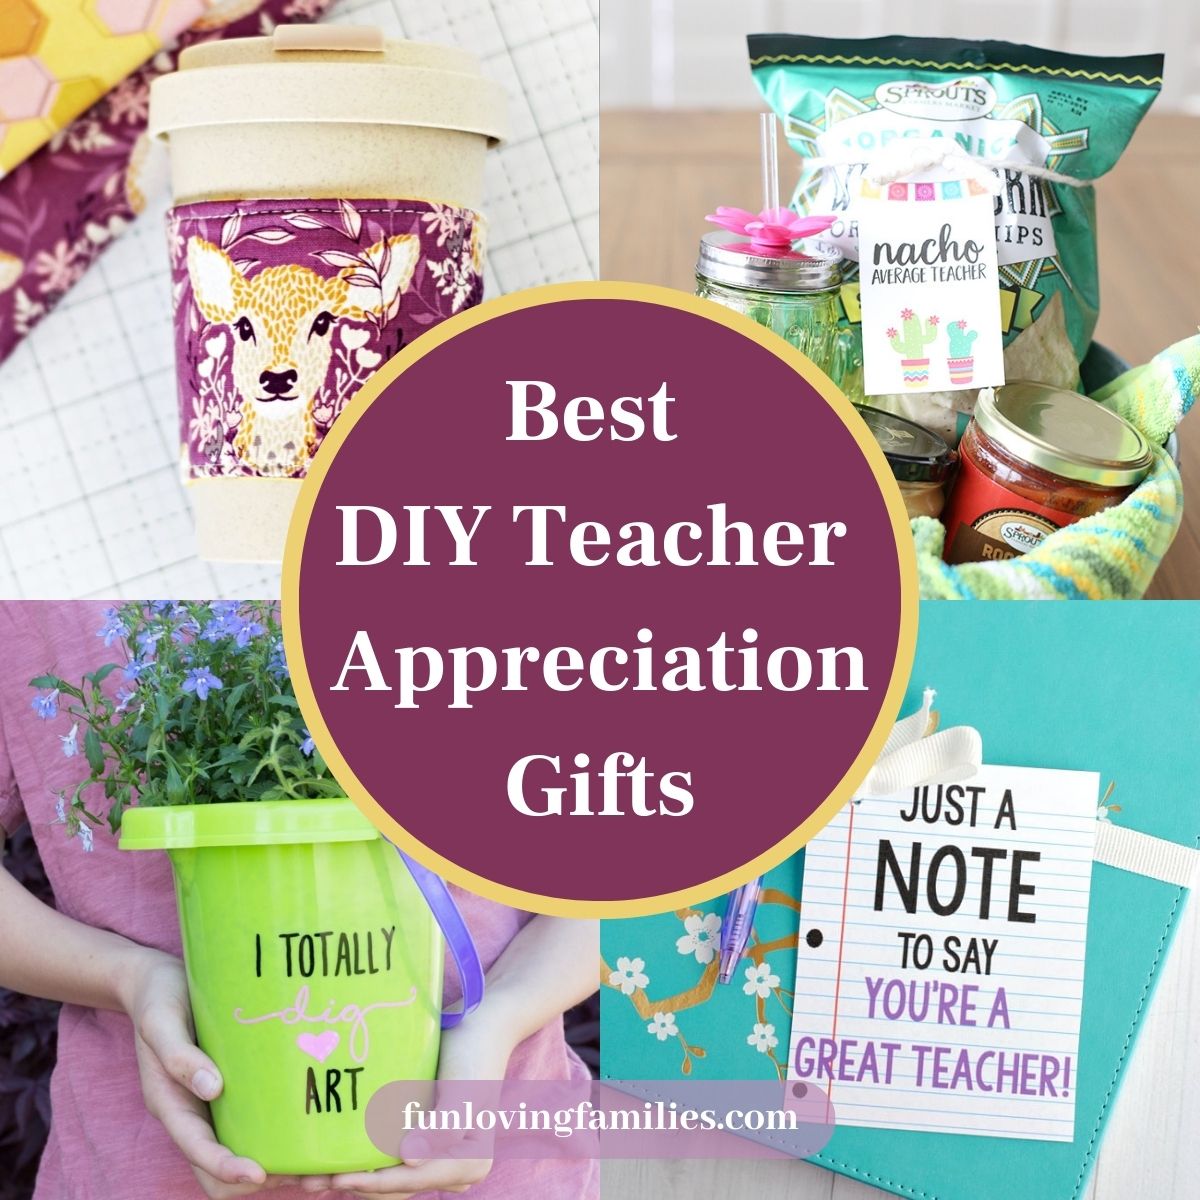 DIY Teacher Gifts Anyone Can Make